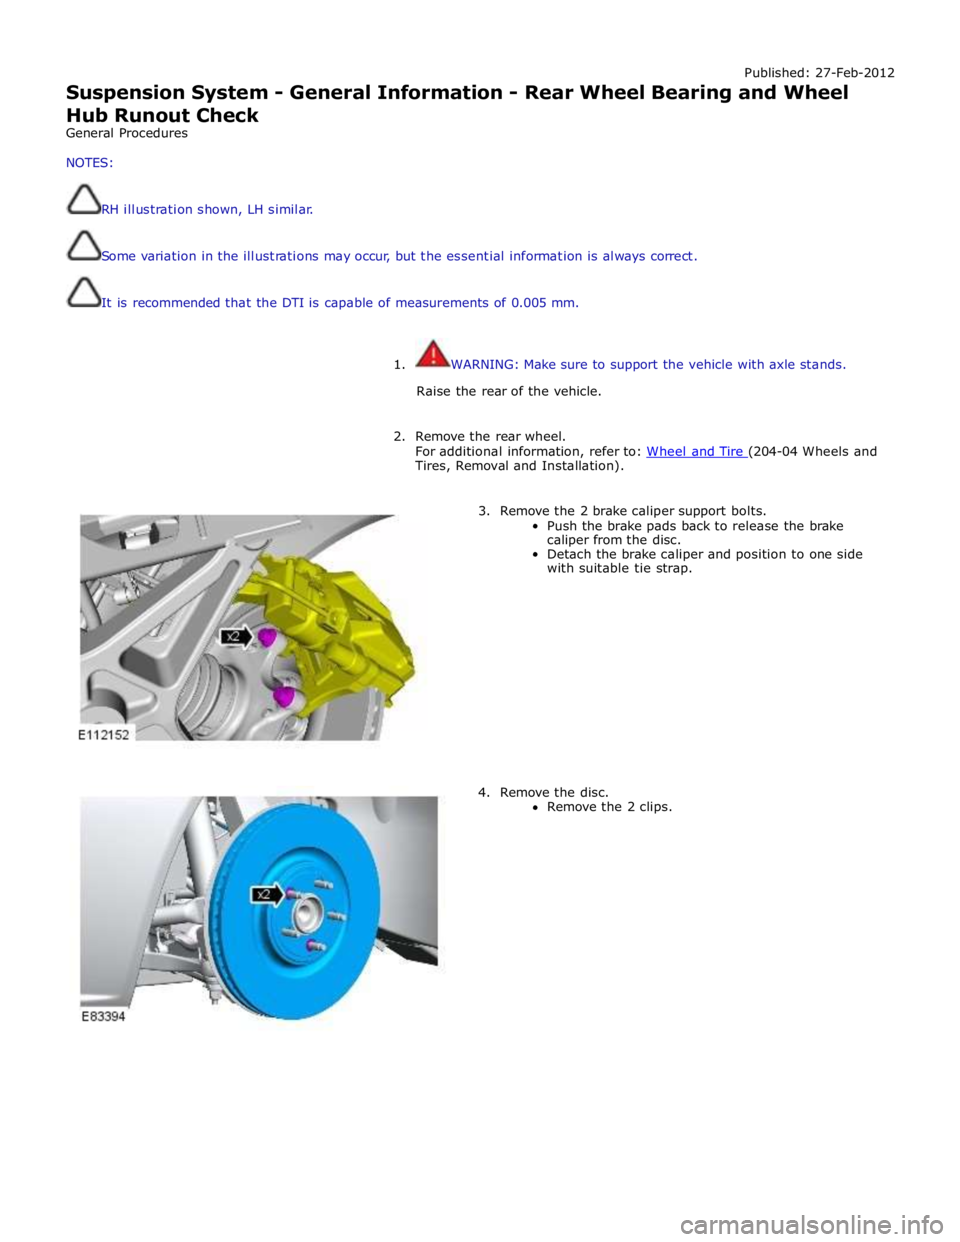 JAGUAR XFR 2010 1.G Workshop Manual Published: 
27-Feb-2012 
Suspension System - General Information - Rear Wheel Bearing and Wheel 
Hub  Ru
 nout Check
 
General  Procedures 
 
NOTES:  
 
  RH illustra tion  shown, LH sim ilar. 
 
  So